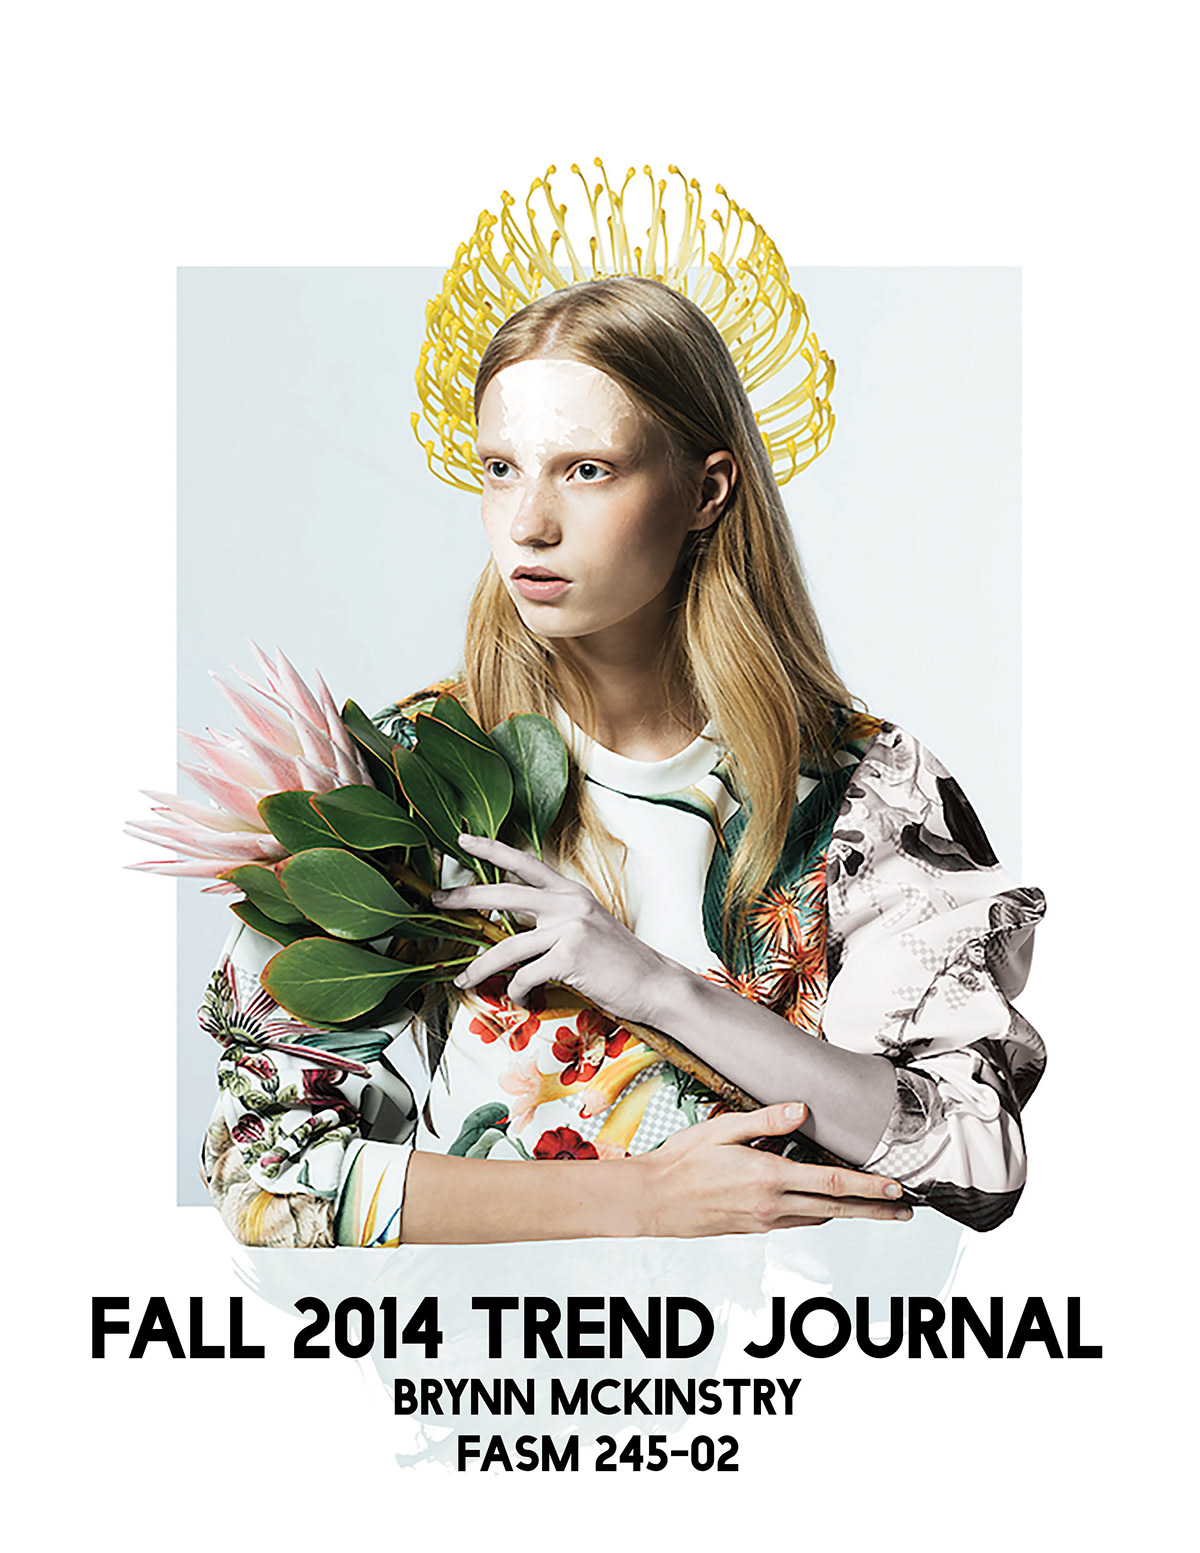 Trend Journal fashion marketing